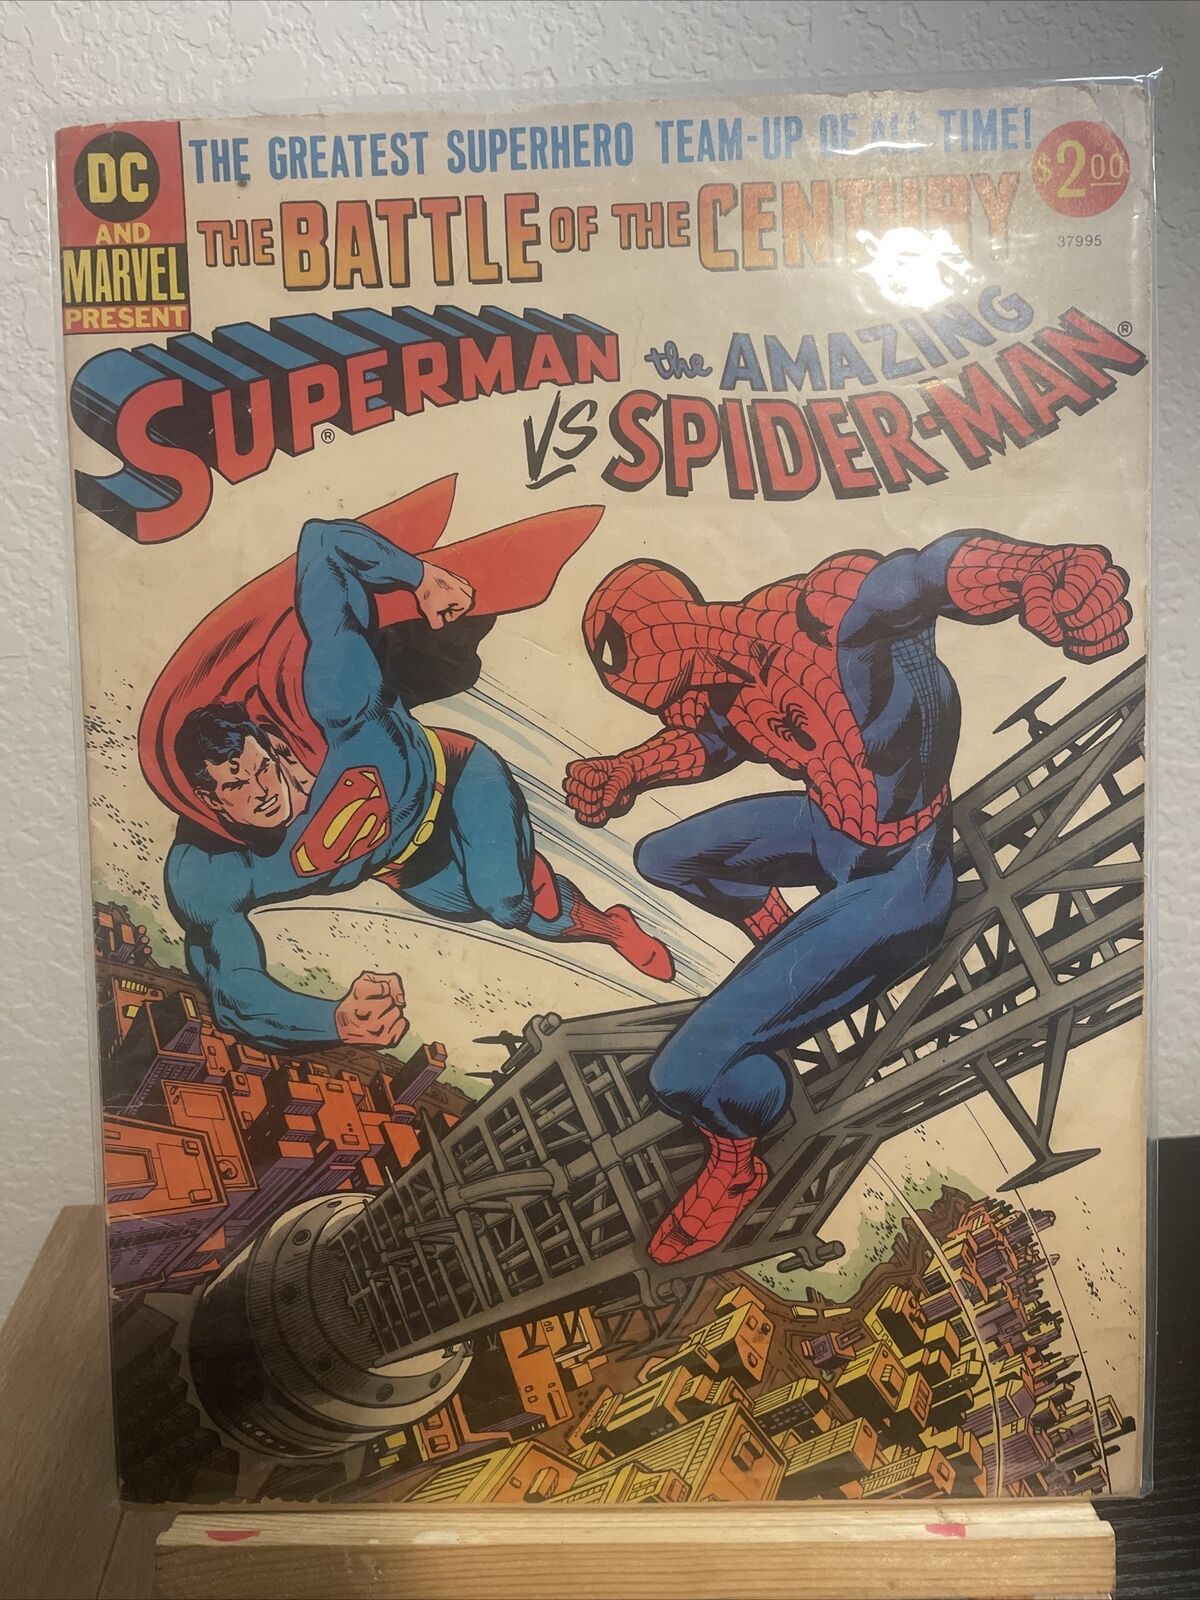 DC AND MARVEL PRESENT SUPERMAN VS. SPIDER-MAN Treasury Edition Comics 1976